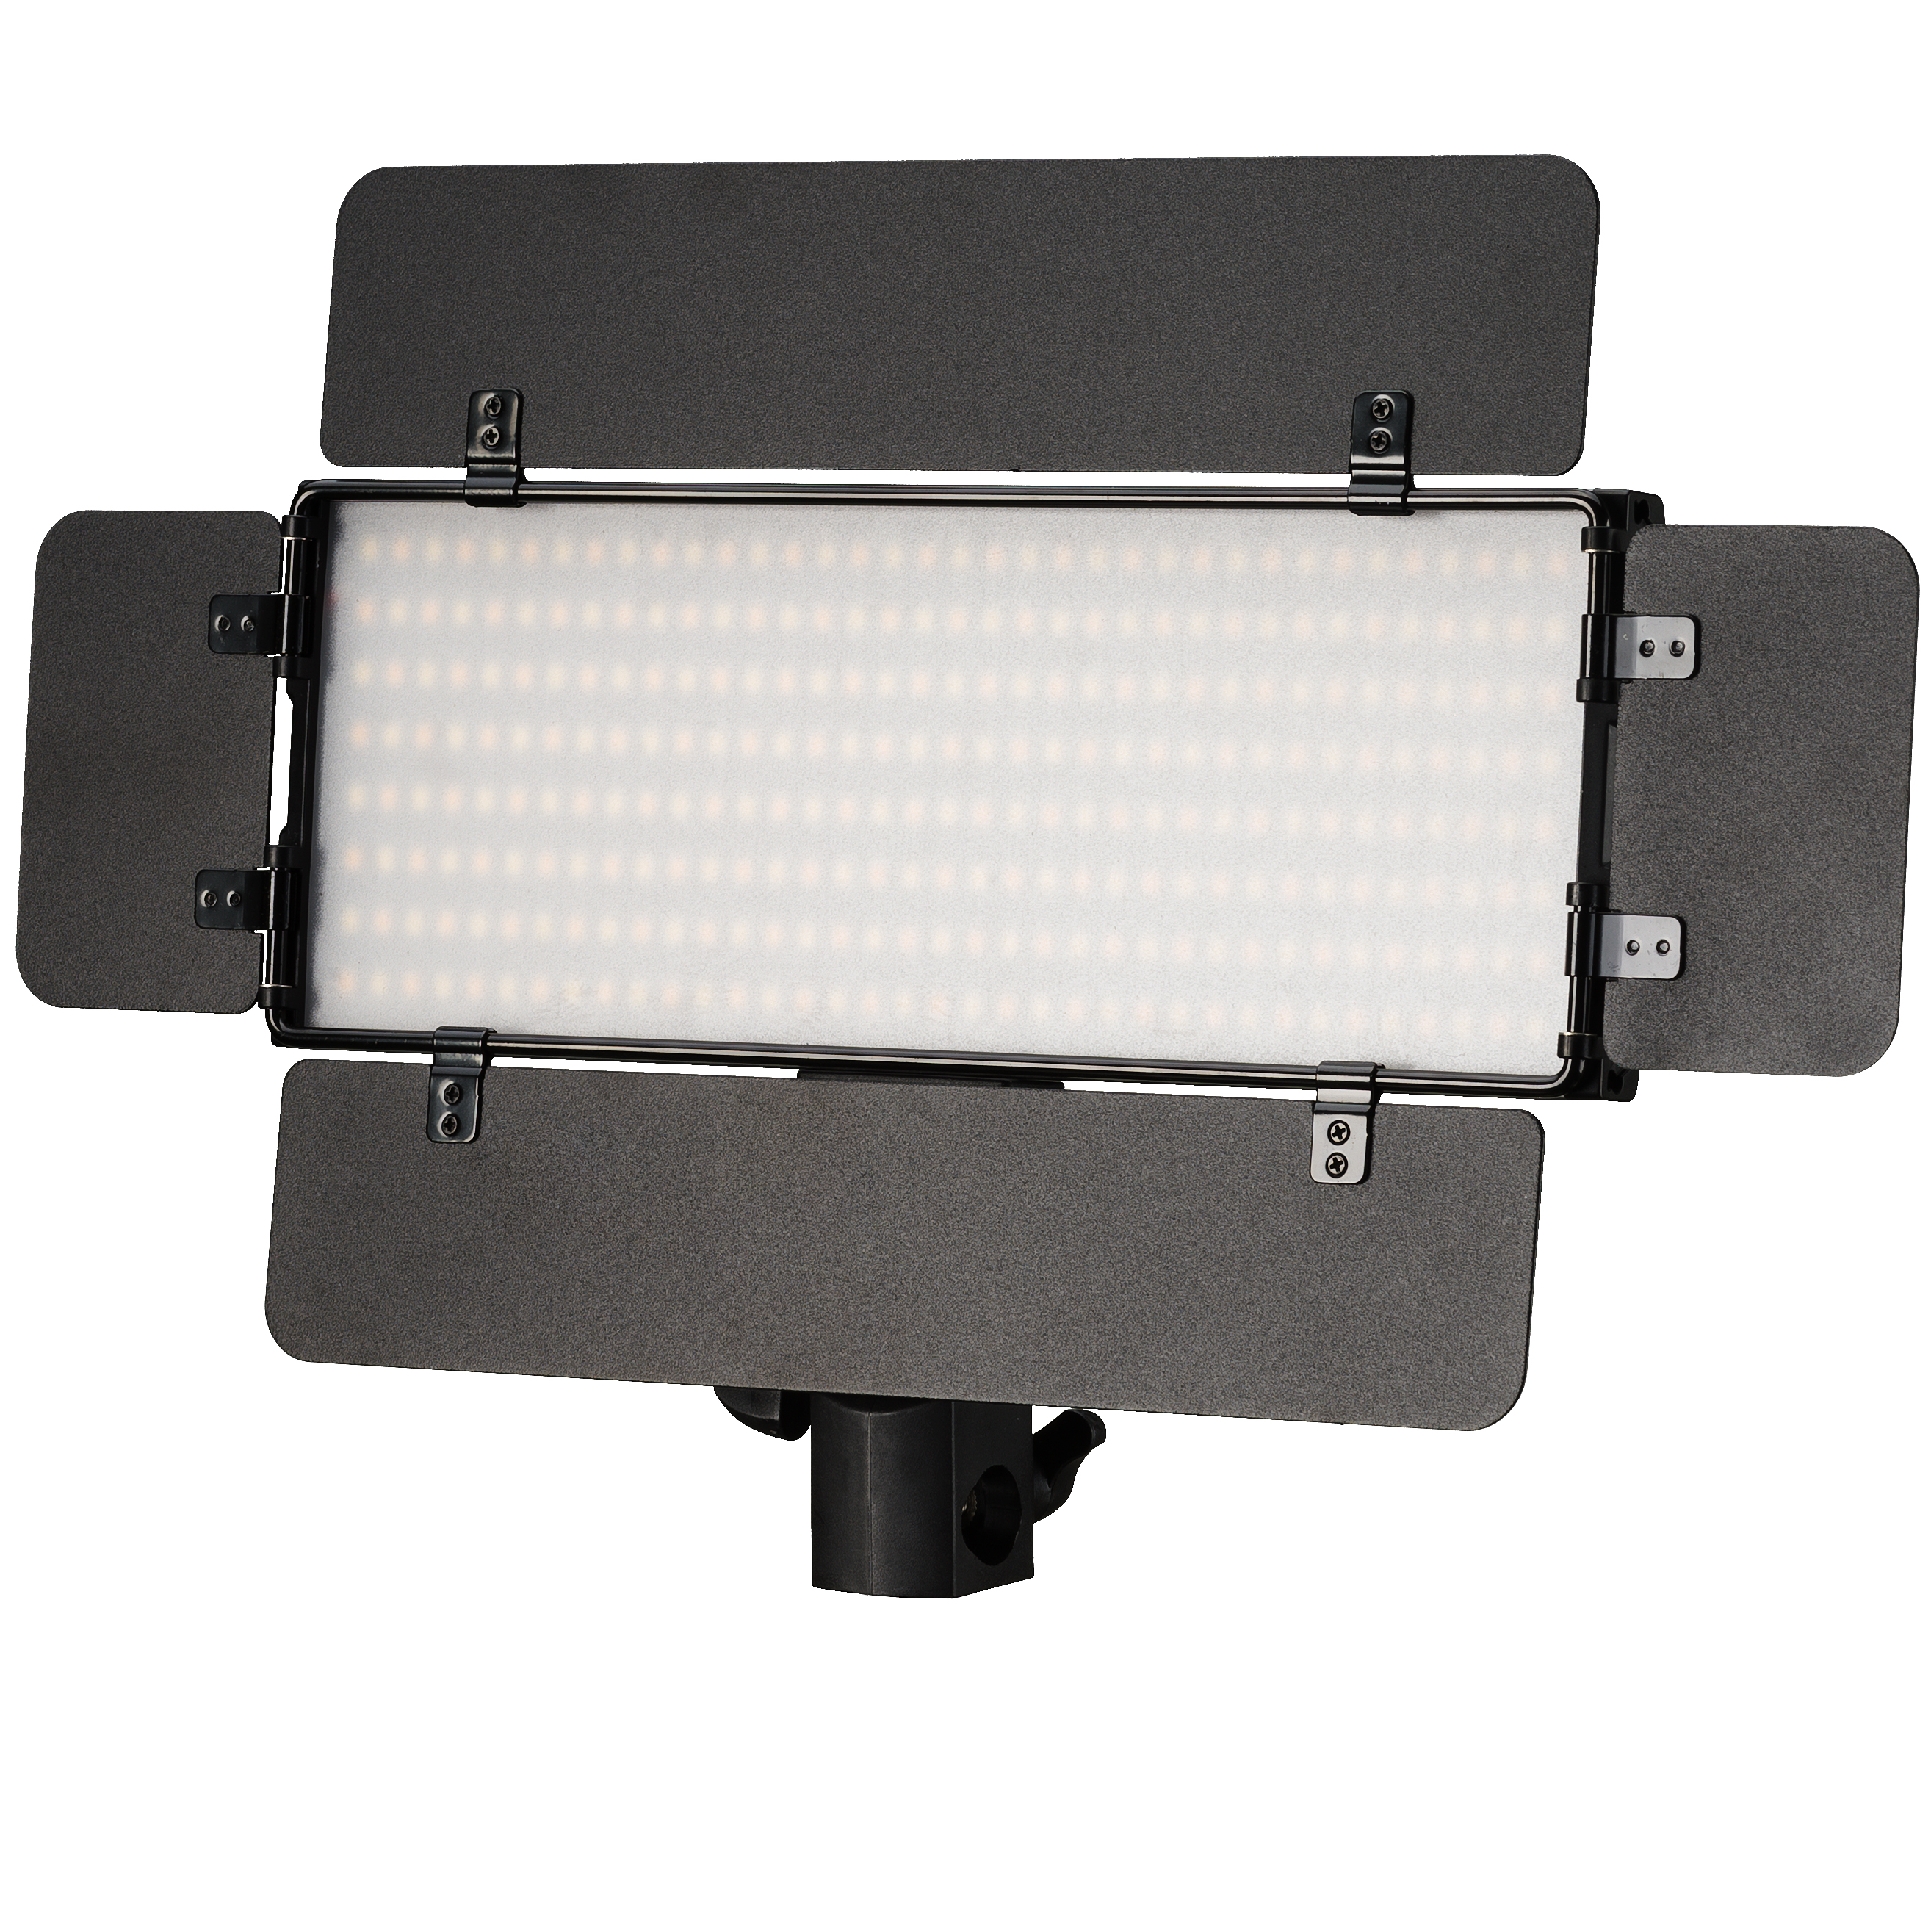 BRESSER PT 30B-II LED Bi-Color Video Light with Barn Doors, Accumulators, Power Adaptor, Remote Control and Storage Case